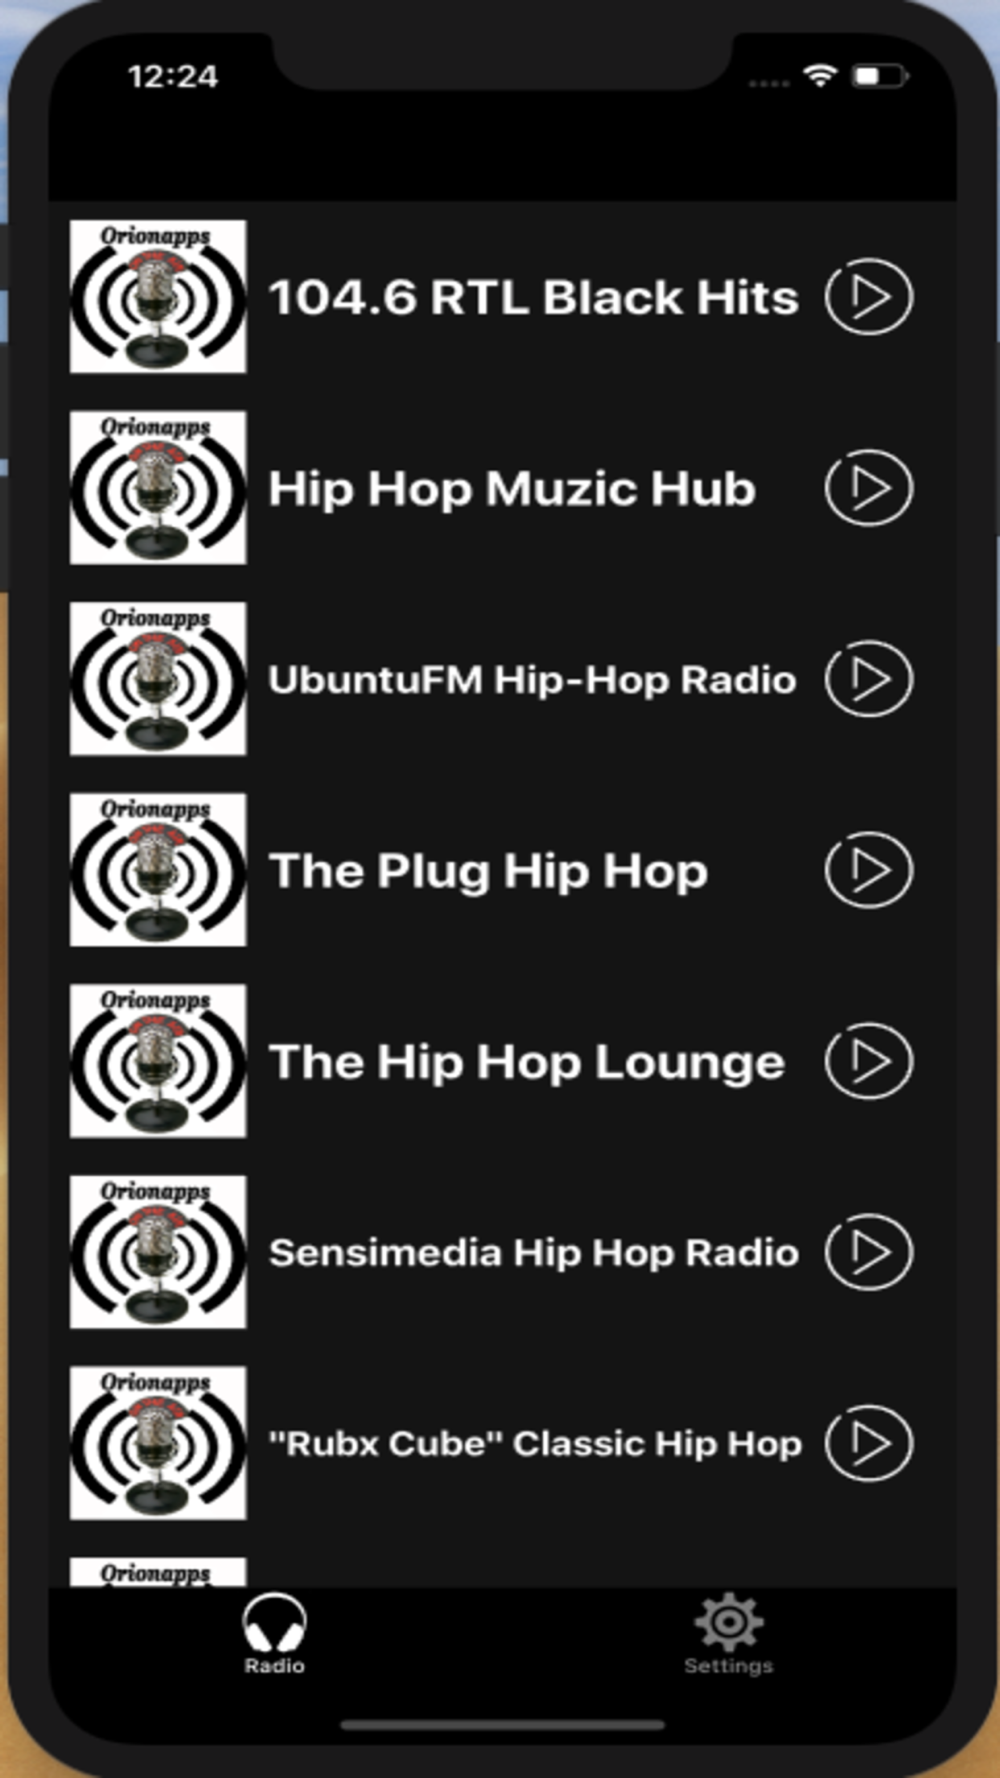 New Hip Hop Radio Free Download App for iPhone - STEPrimo.com